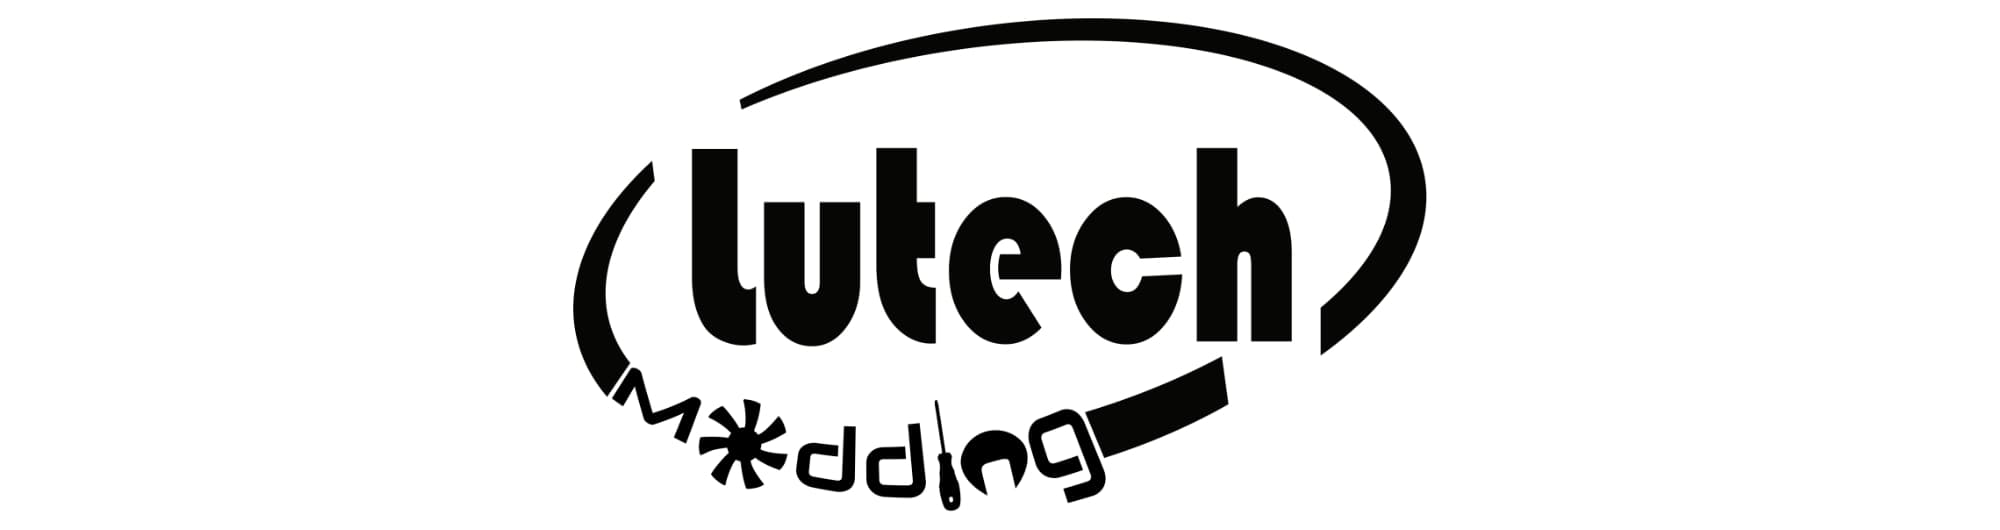 Lutech Modding